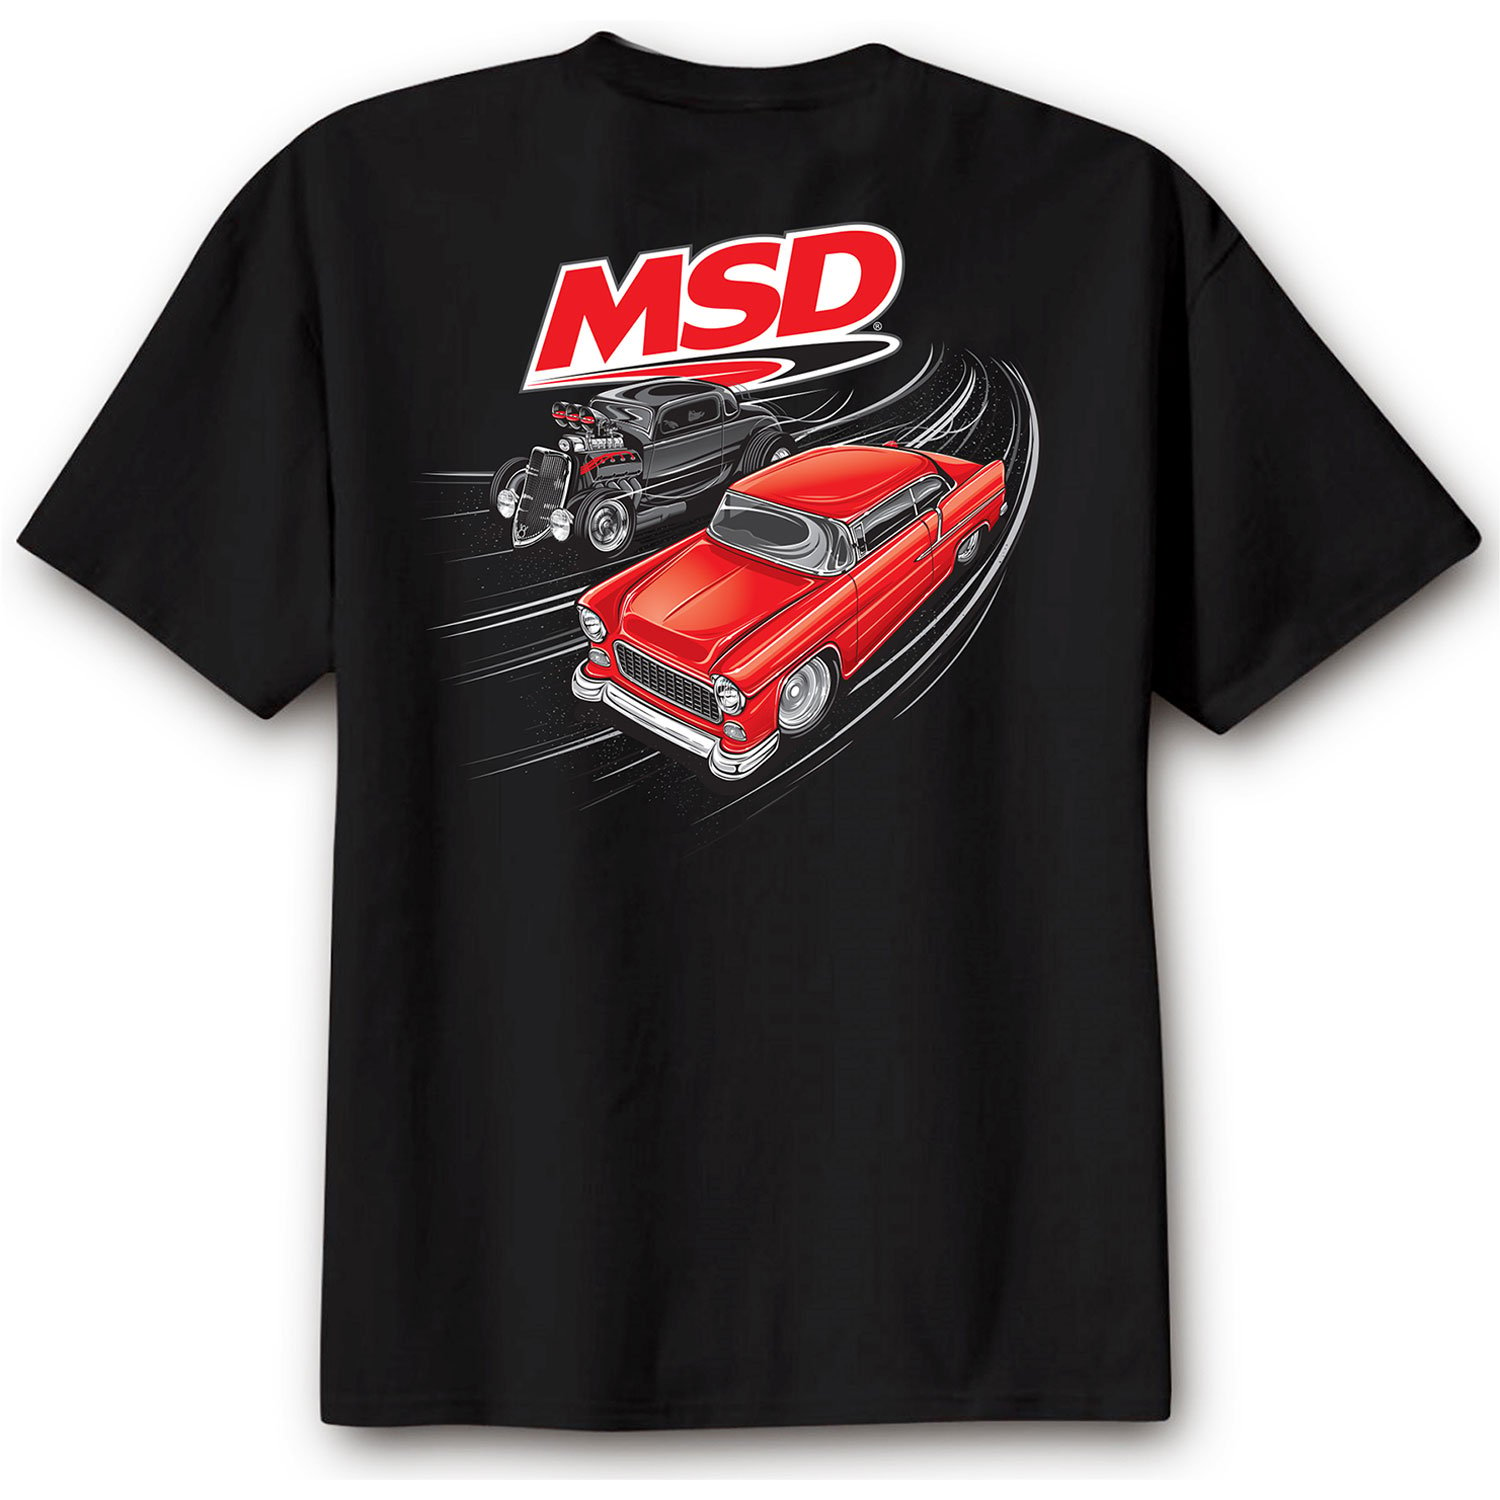 MSD Racer T-Shirt X-Large Black